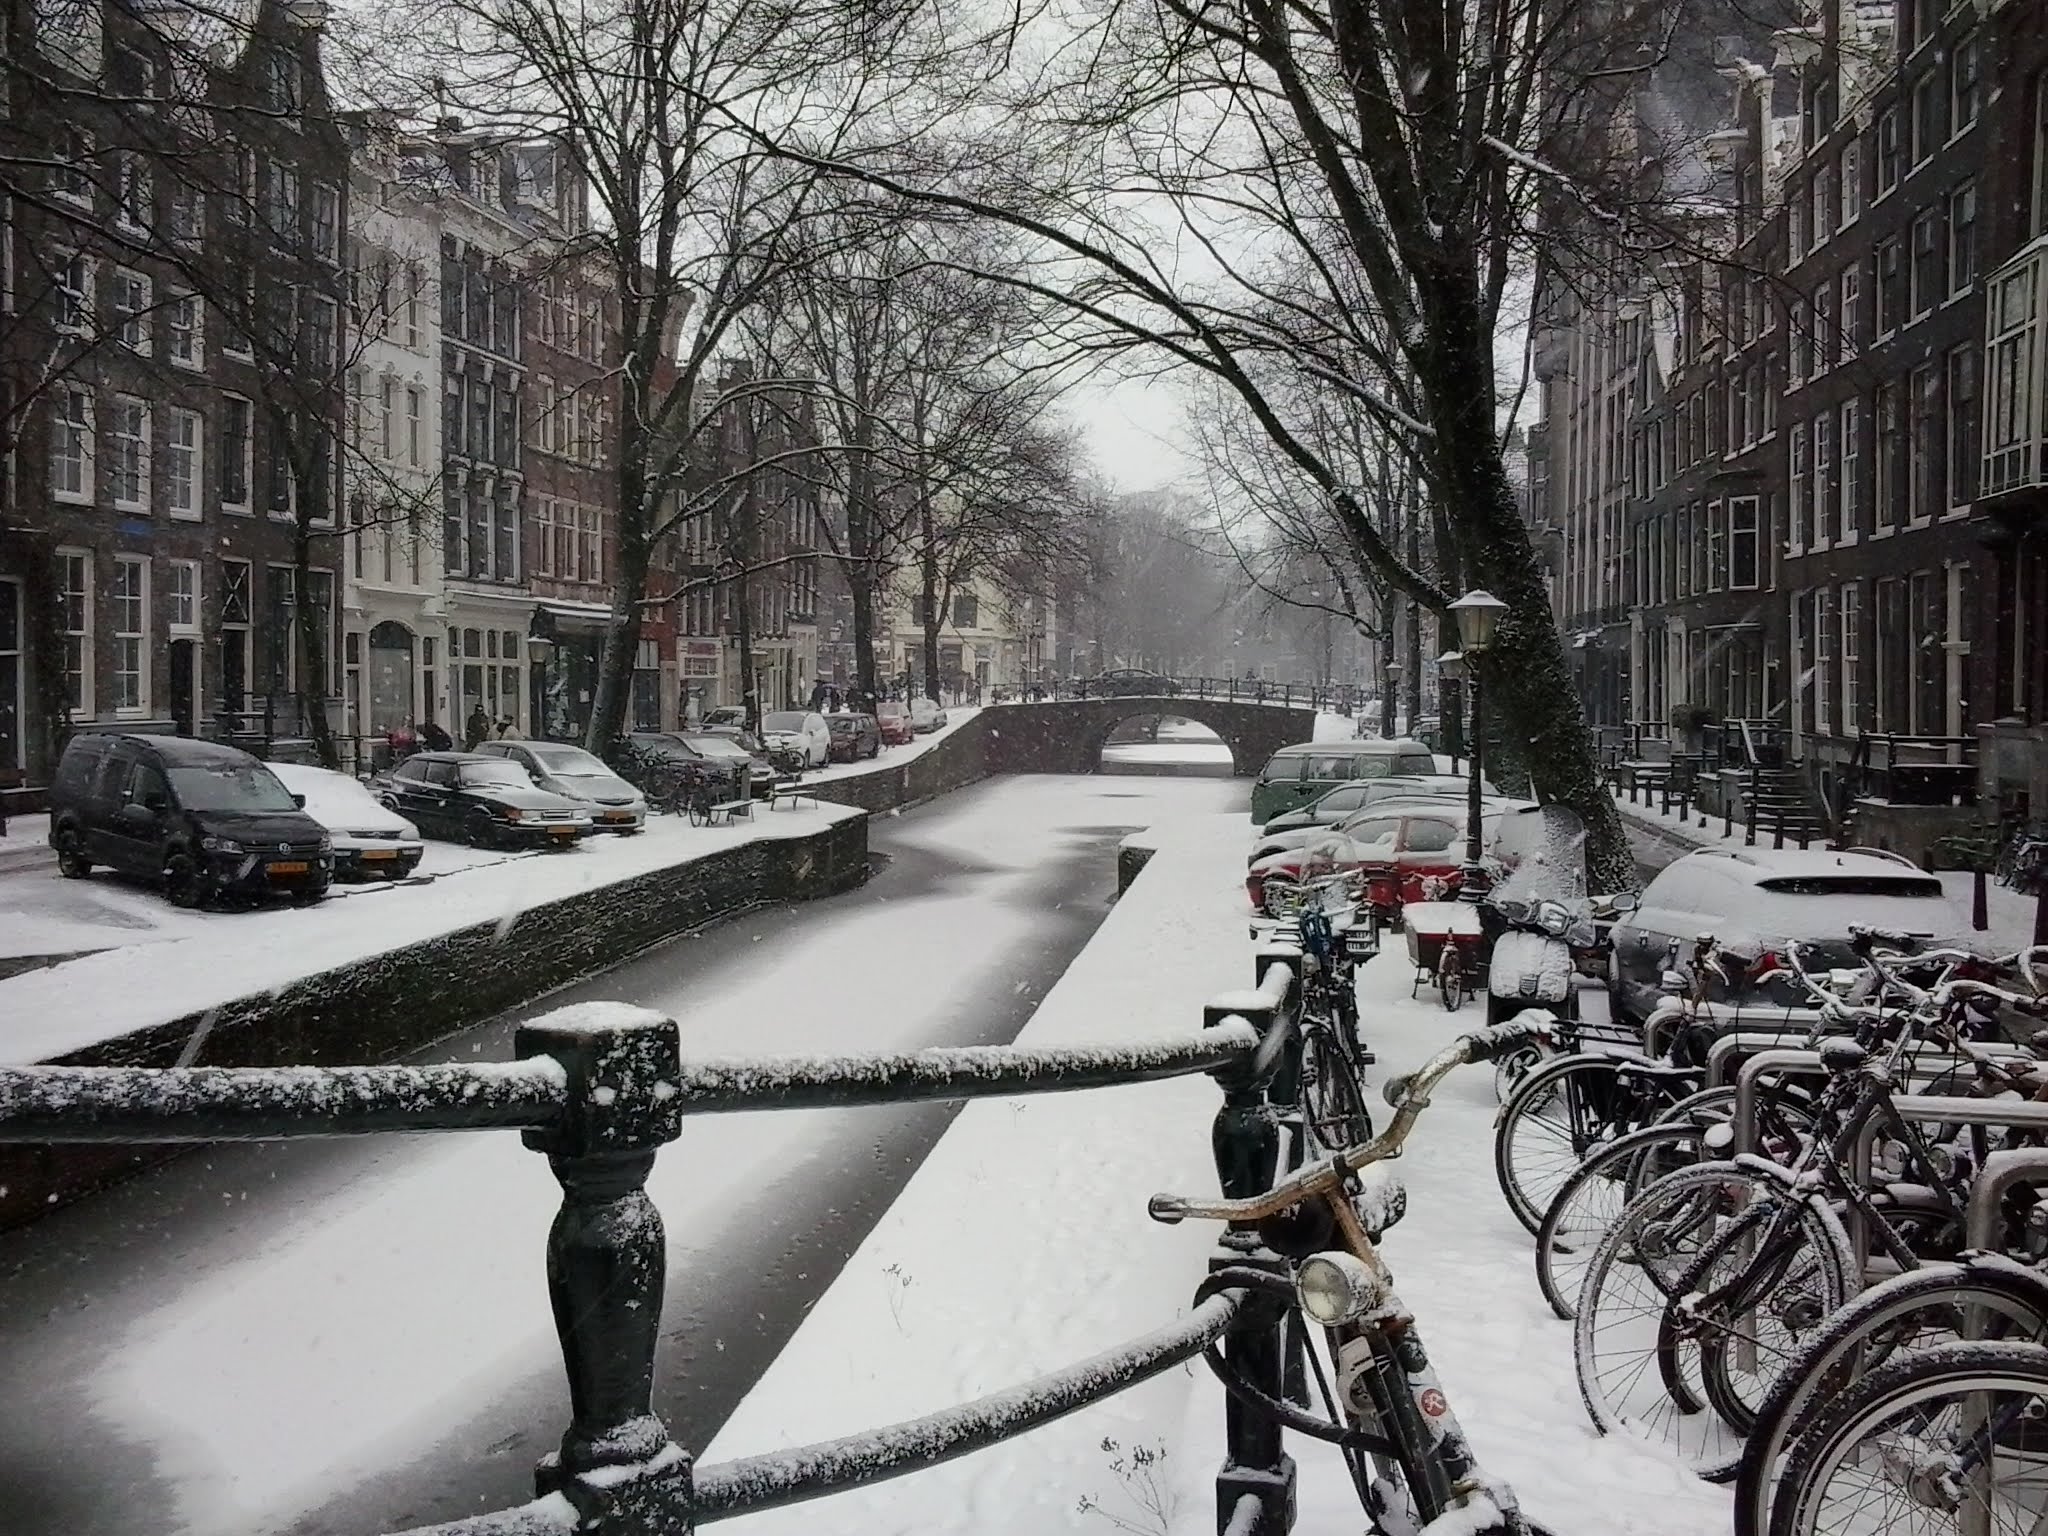 Amsterdam Jan 2013. Canals frozen